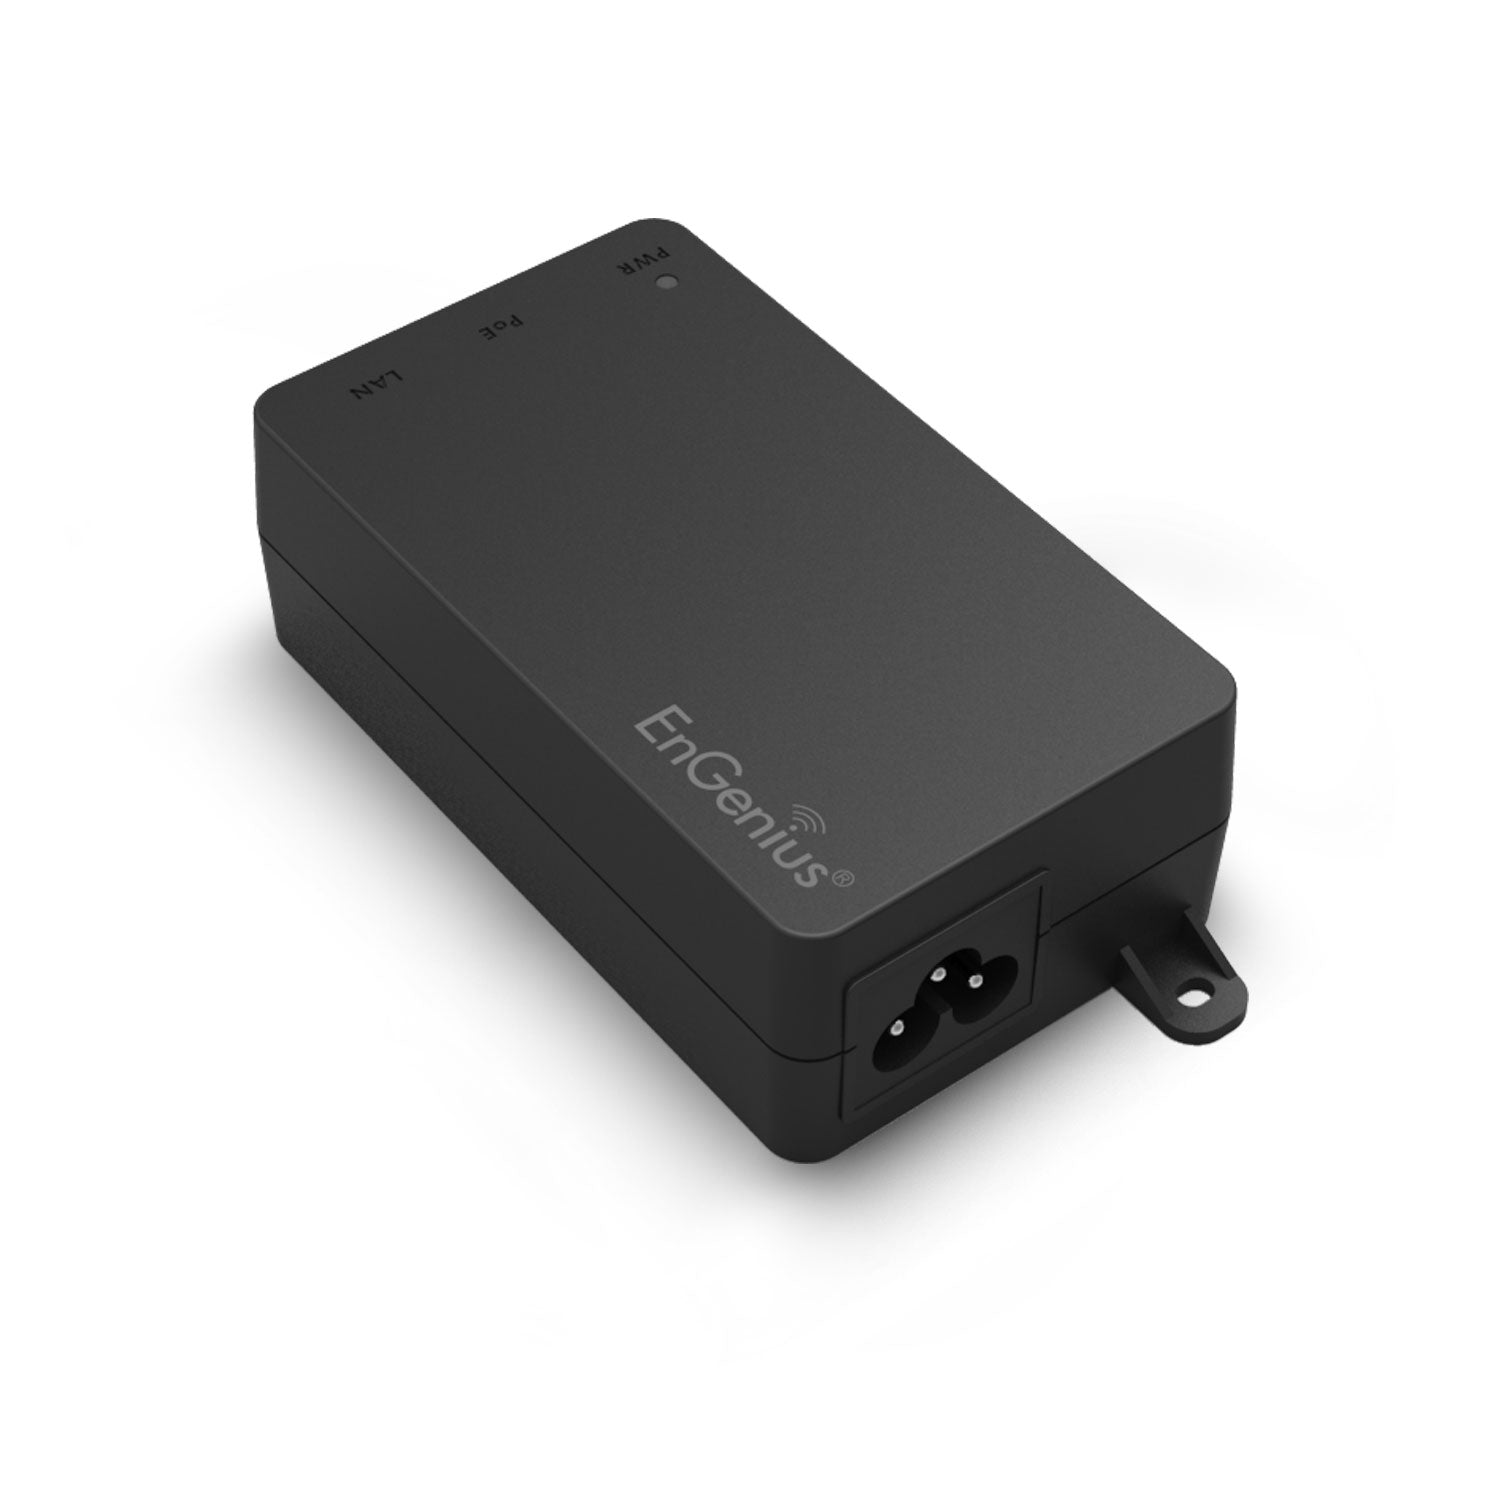 EPA5006HAT: 2.5 Gigabit 802.3at PoE Adapter